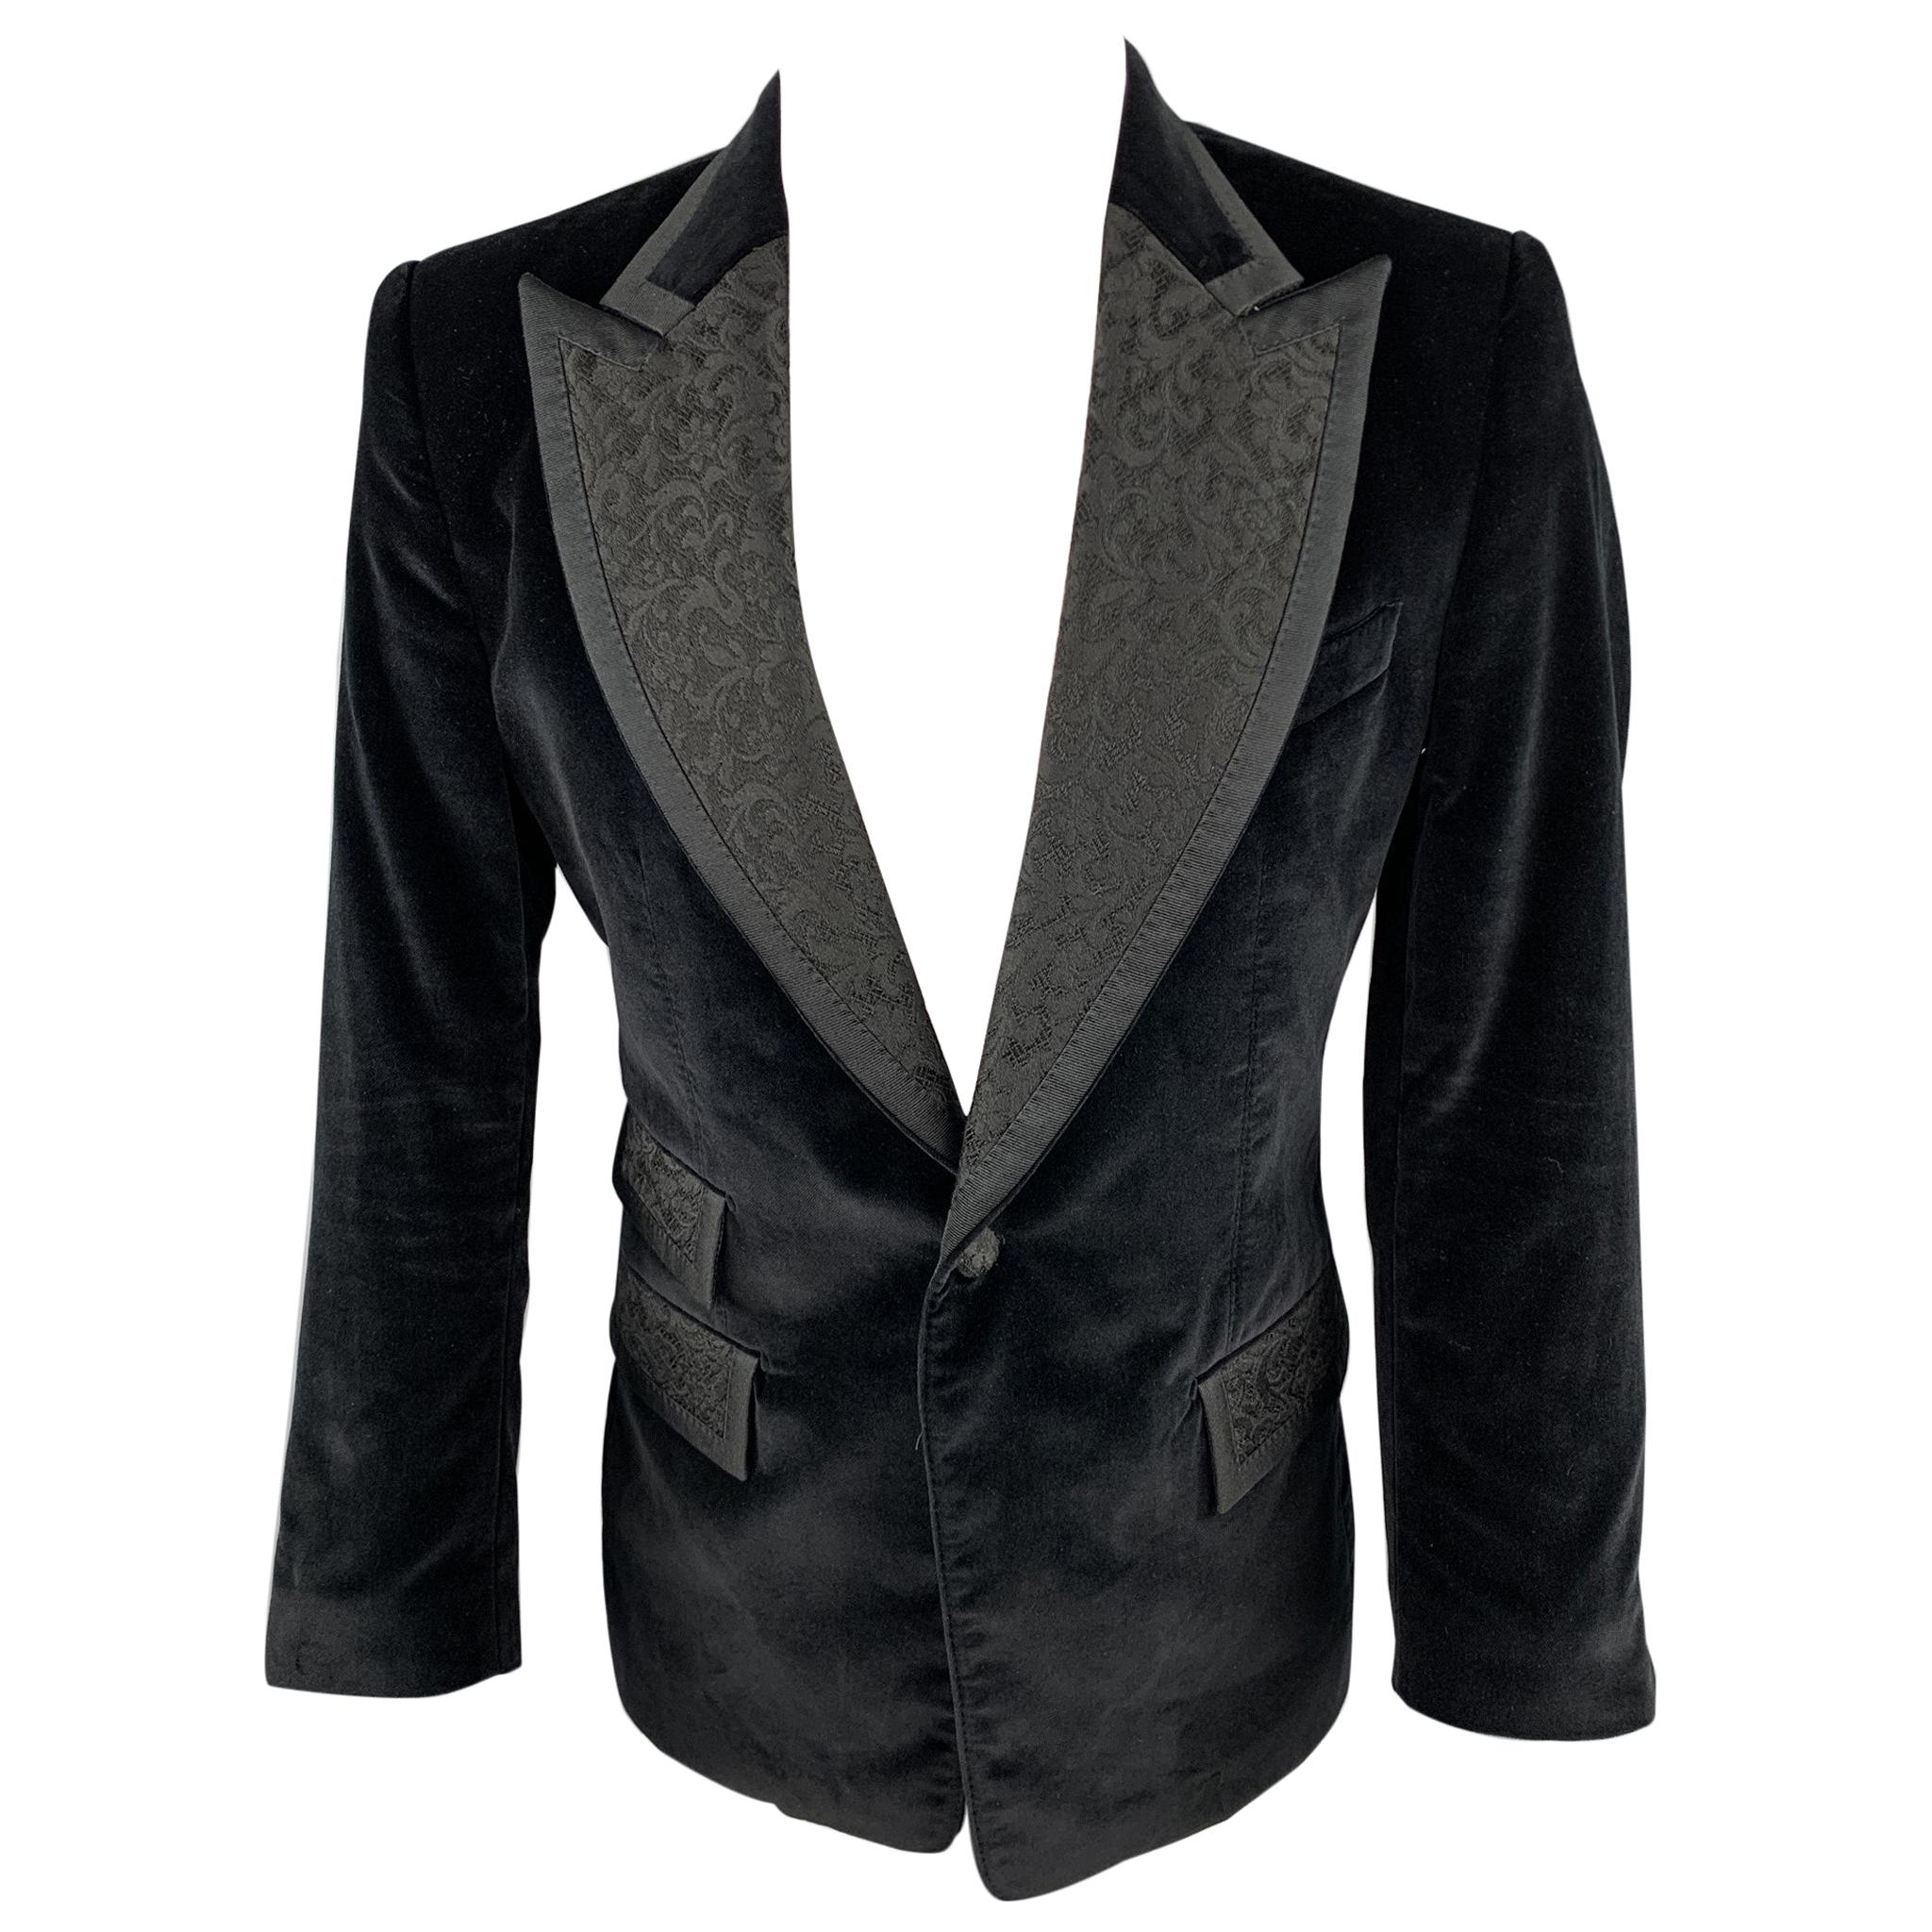 DOLCE & GABBANA Size 40 Black Velvet Jacquard Peak Lapel Sport Coat